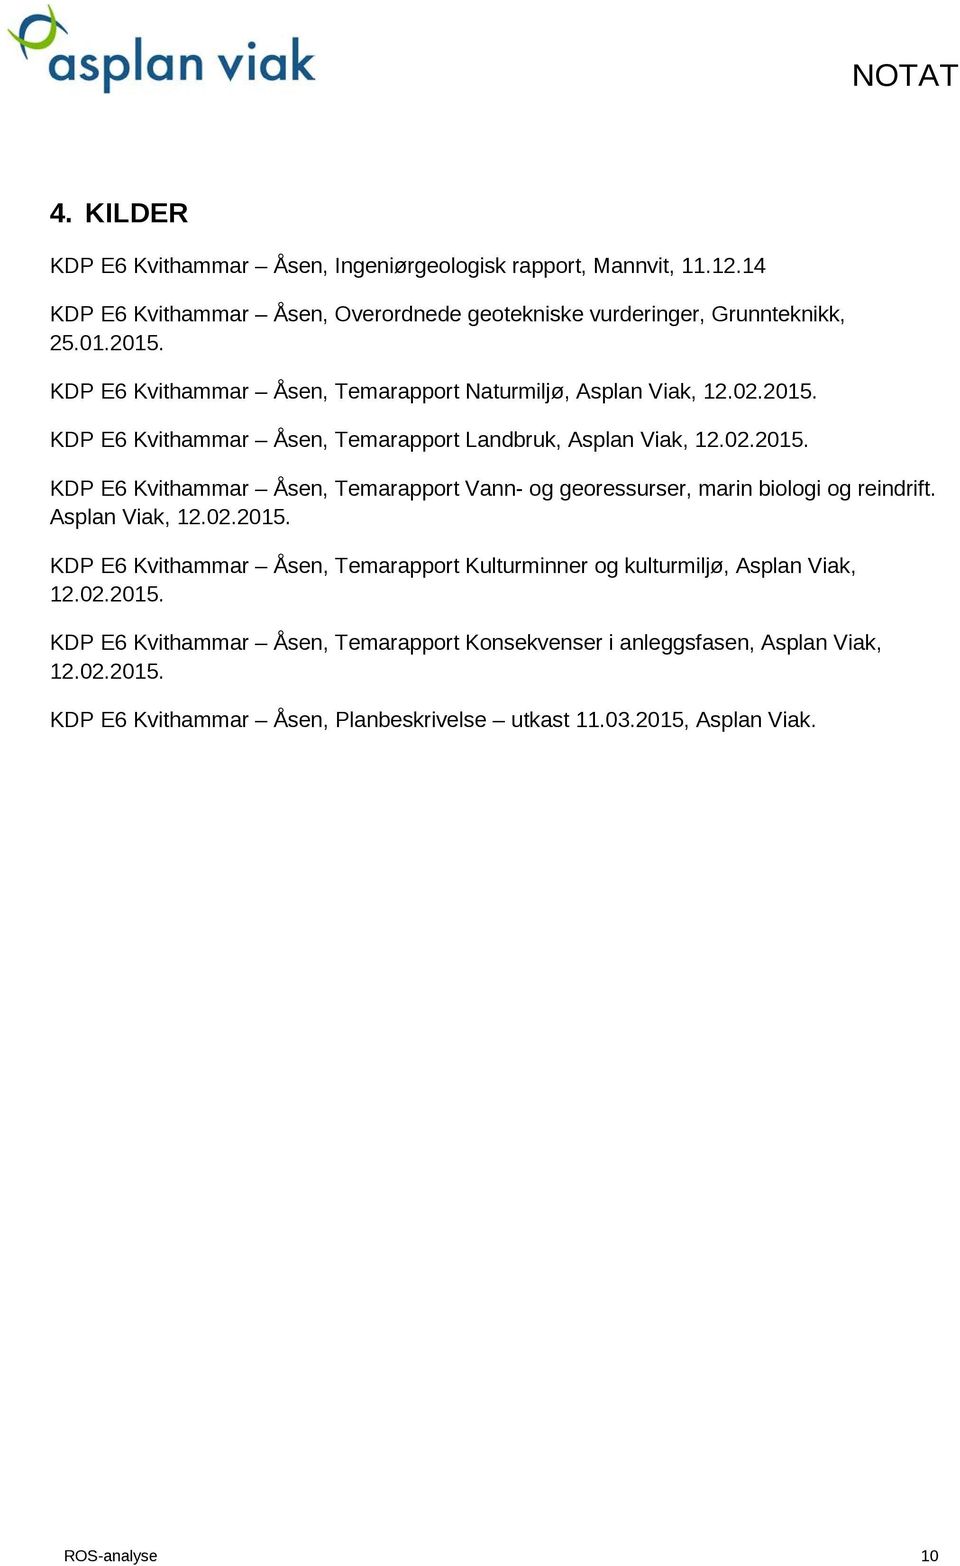 Asplan Viak, 12.02.2015. KDP E6 Kvithammar Åsen, Temarapport Kulturminner og kulturmiljø, Asplan Viak, 12.02.2015. KDP E6 Kvithammar Åsen, Temarapport Konsekvenser i anleggsfasen, Asplan Viak, 12.